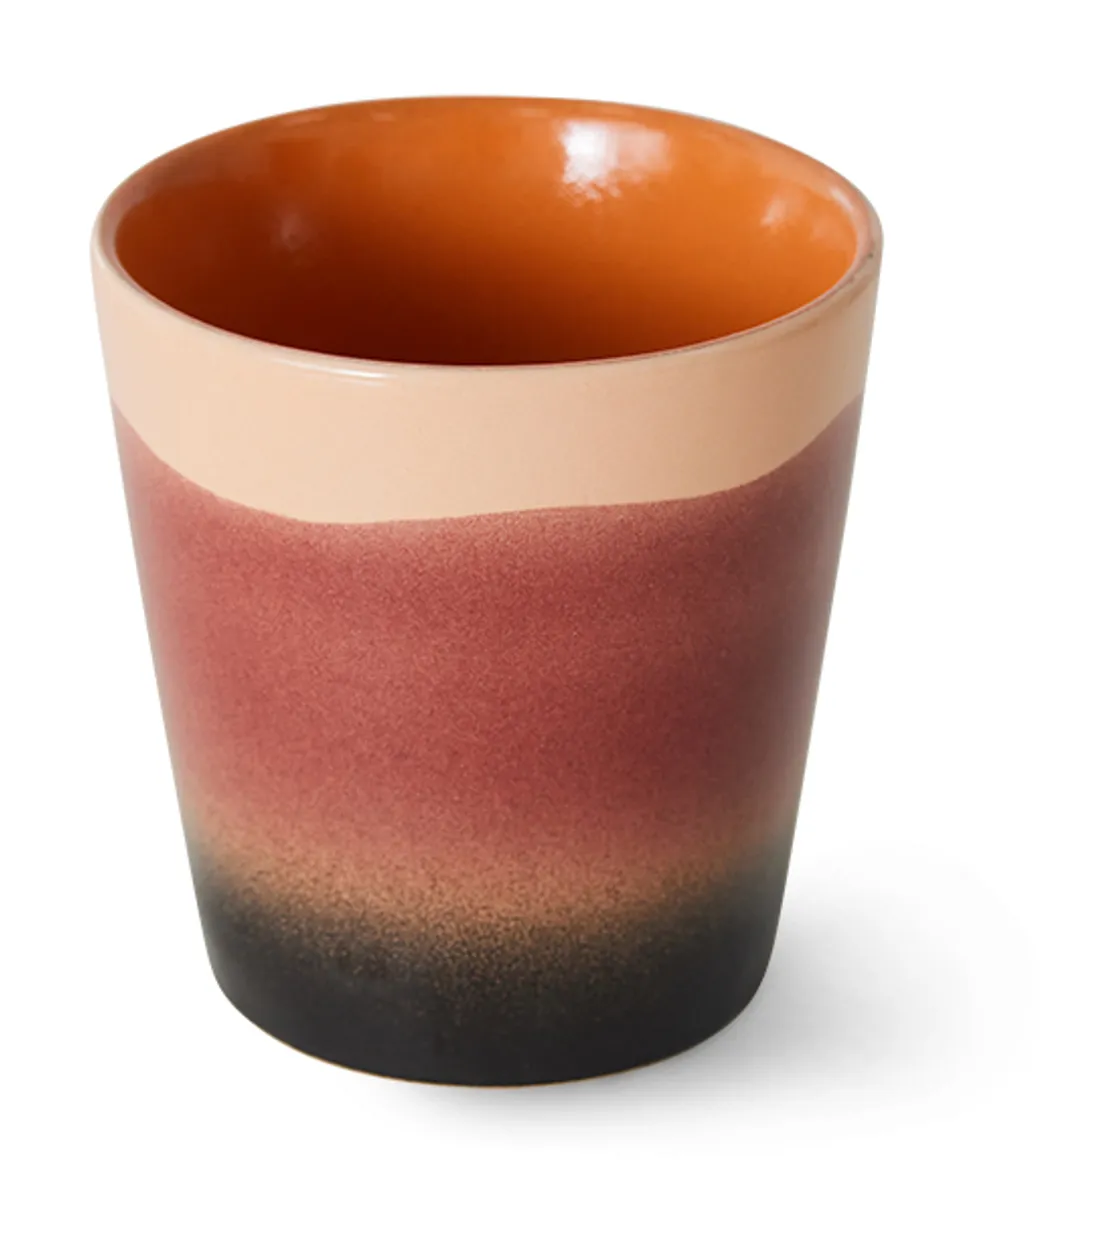 70s ceramics: coffee mug, rise